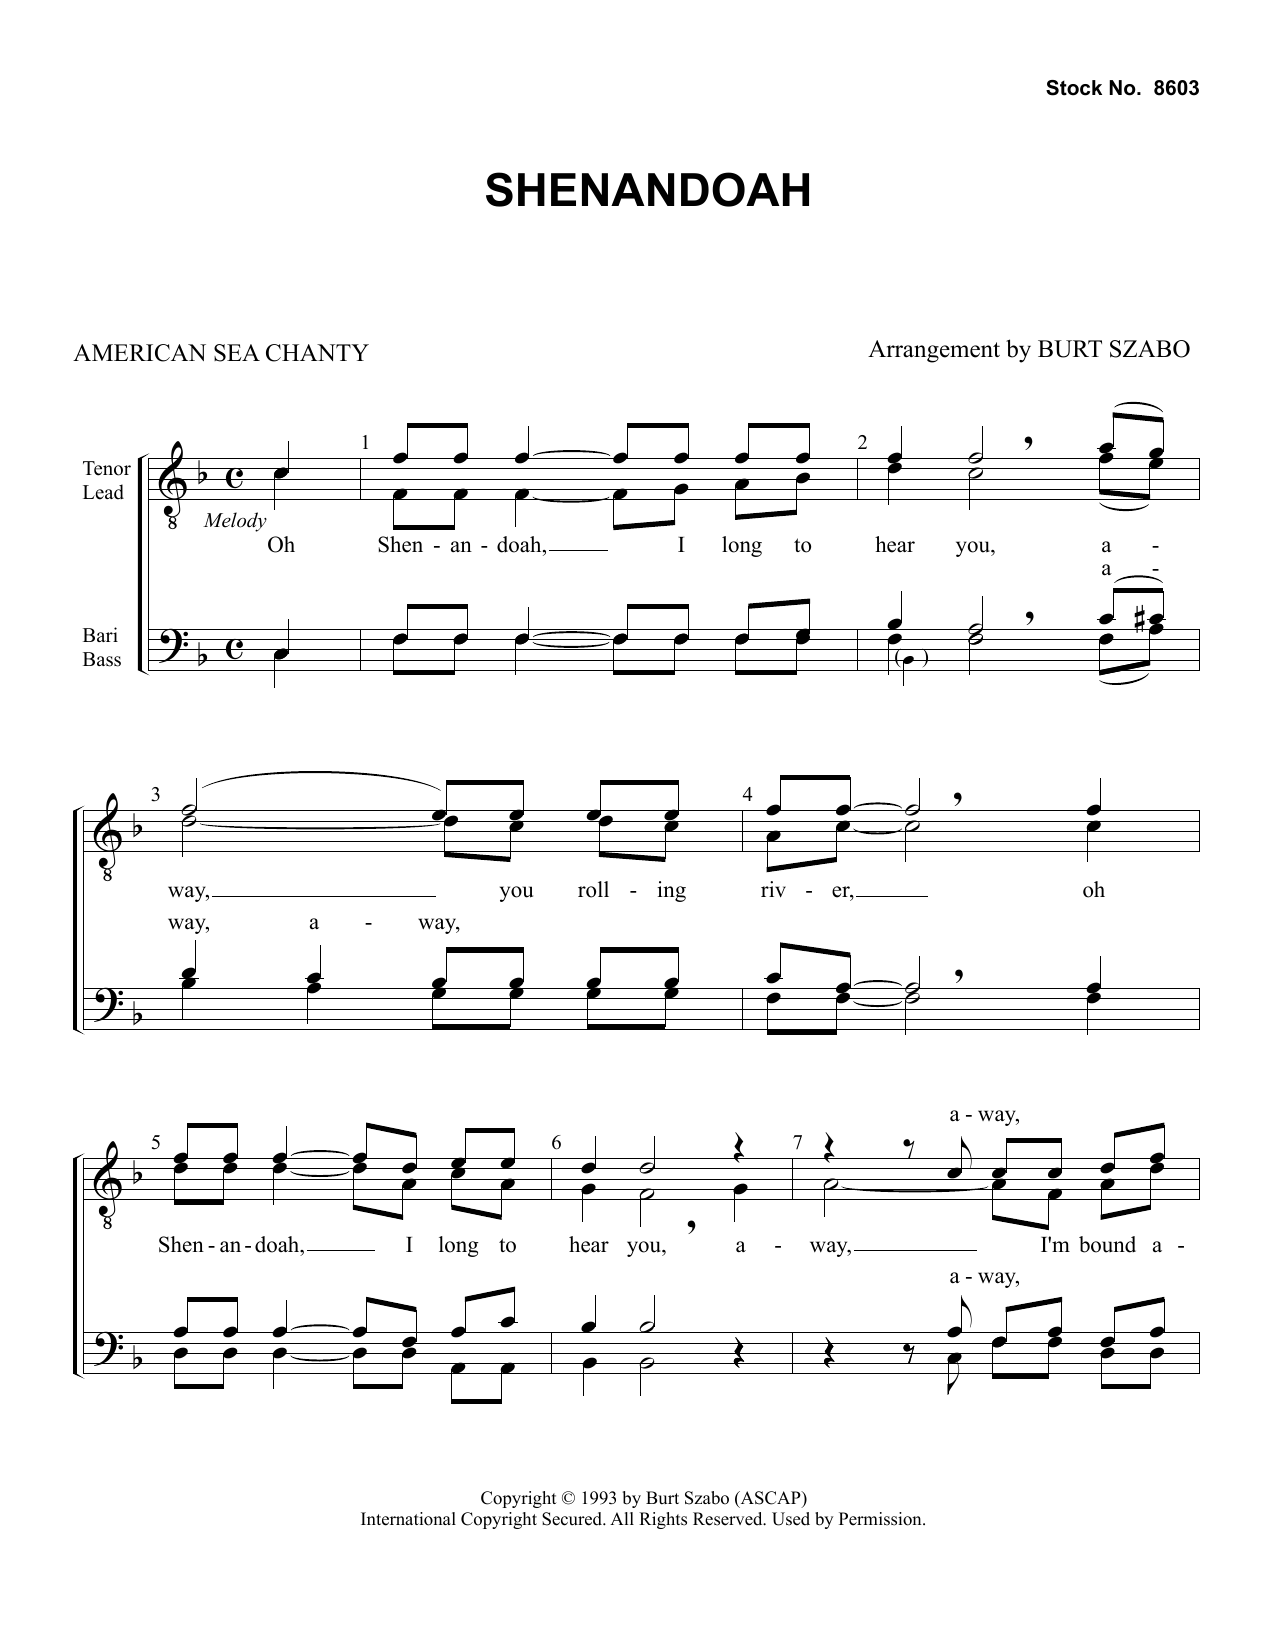 Download American Sea Chanty Shenandoah (arr. Burt Szabo) Sheet Music and learn how to play TTBB Choir PDF digital score in minutes